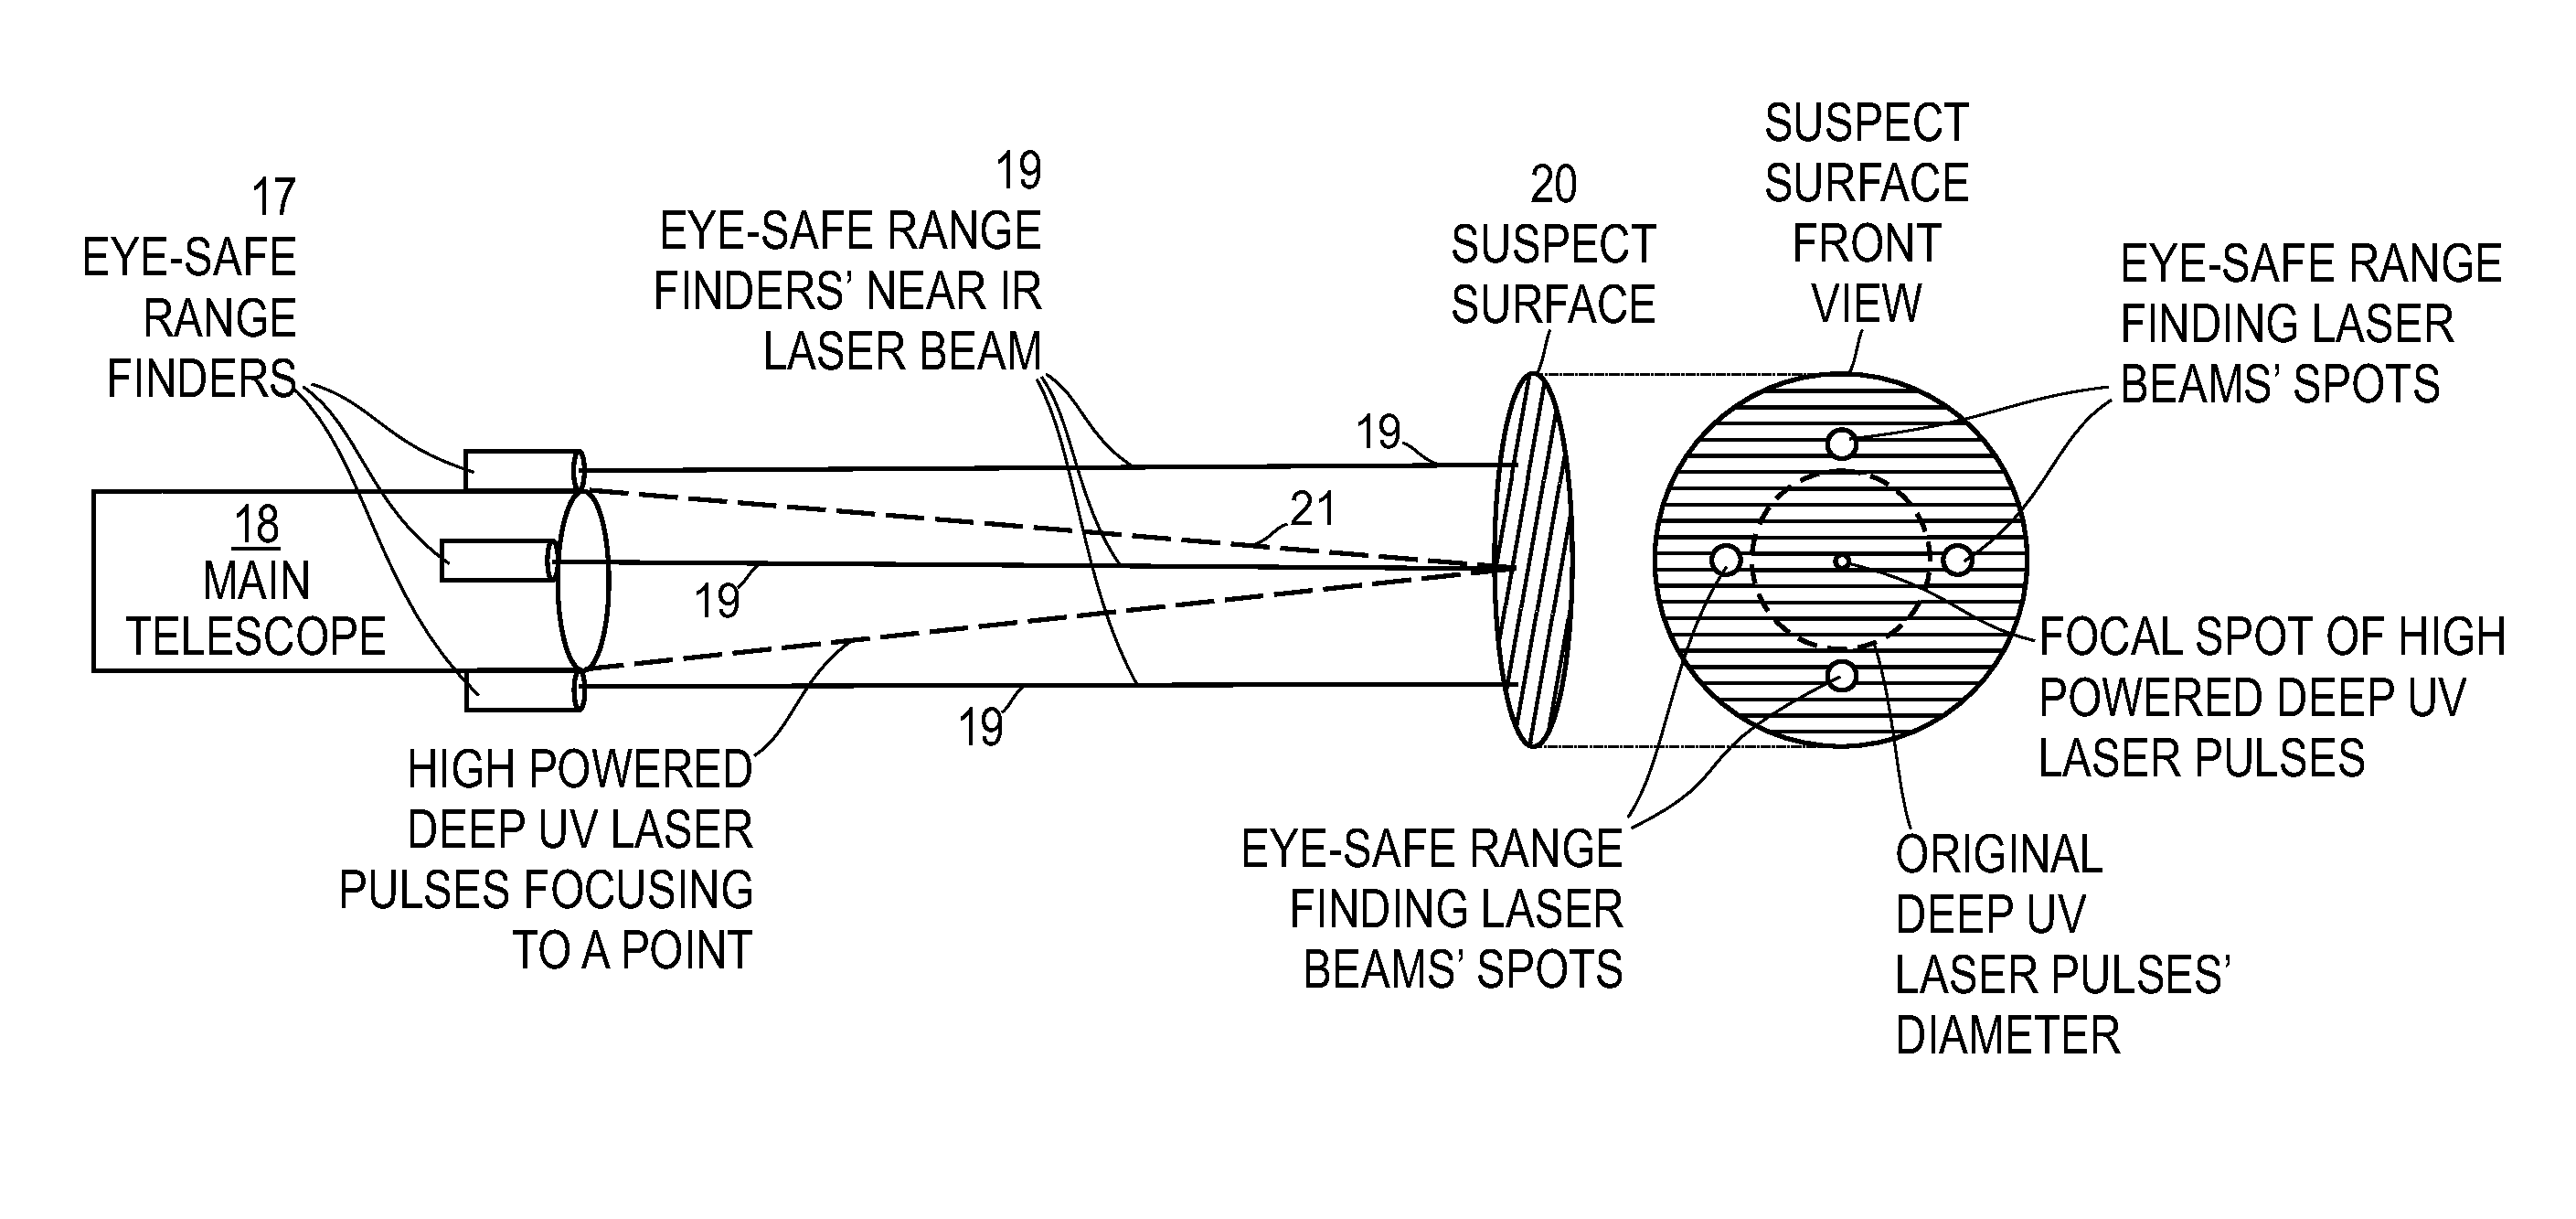 Laser eye-safety method and apparatus